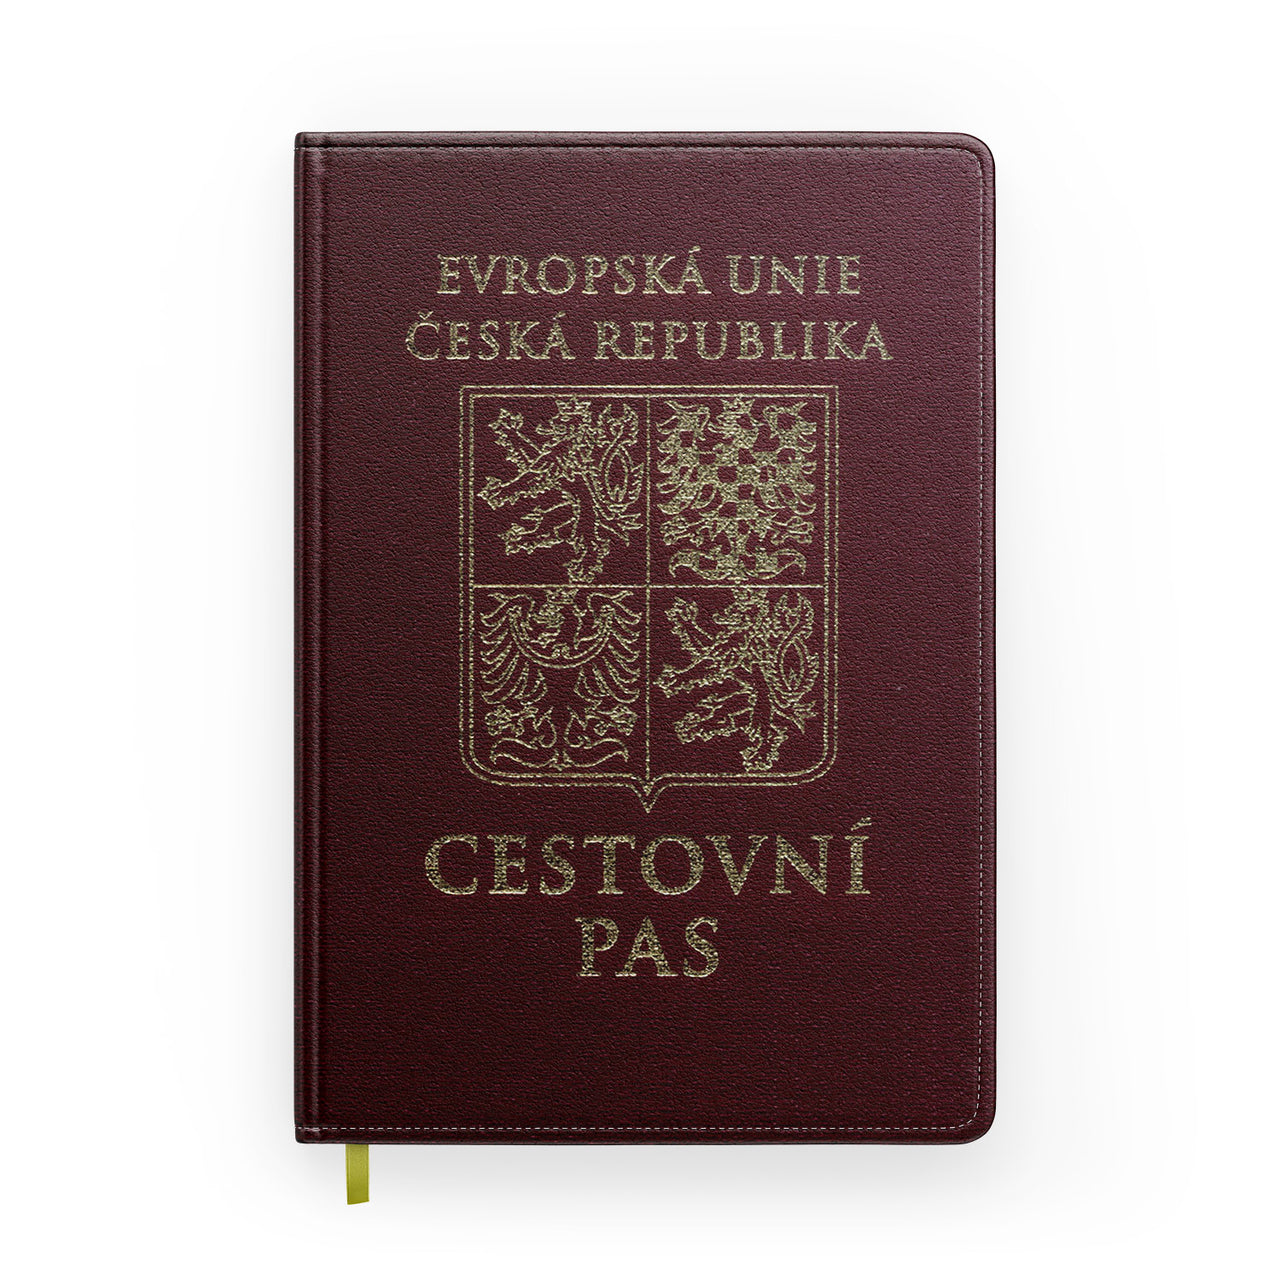 Czech Republic (Czechia) Passport Designed Notebooks